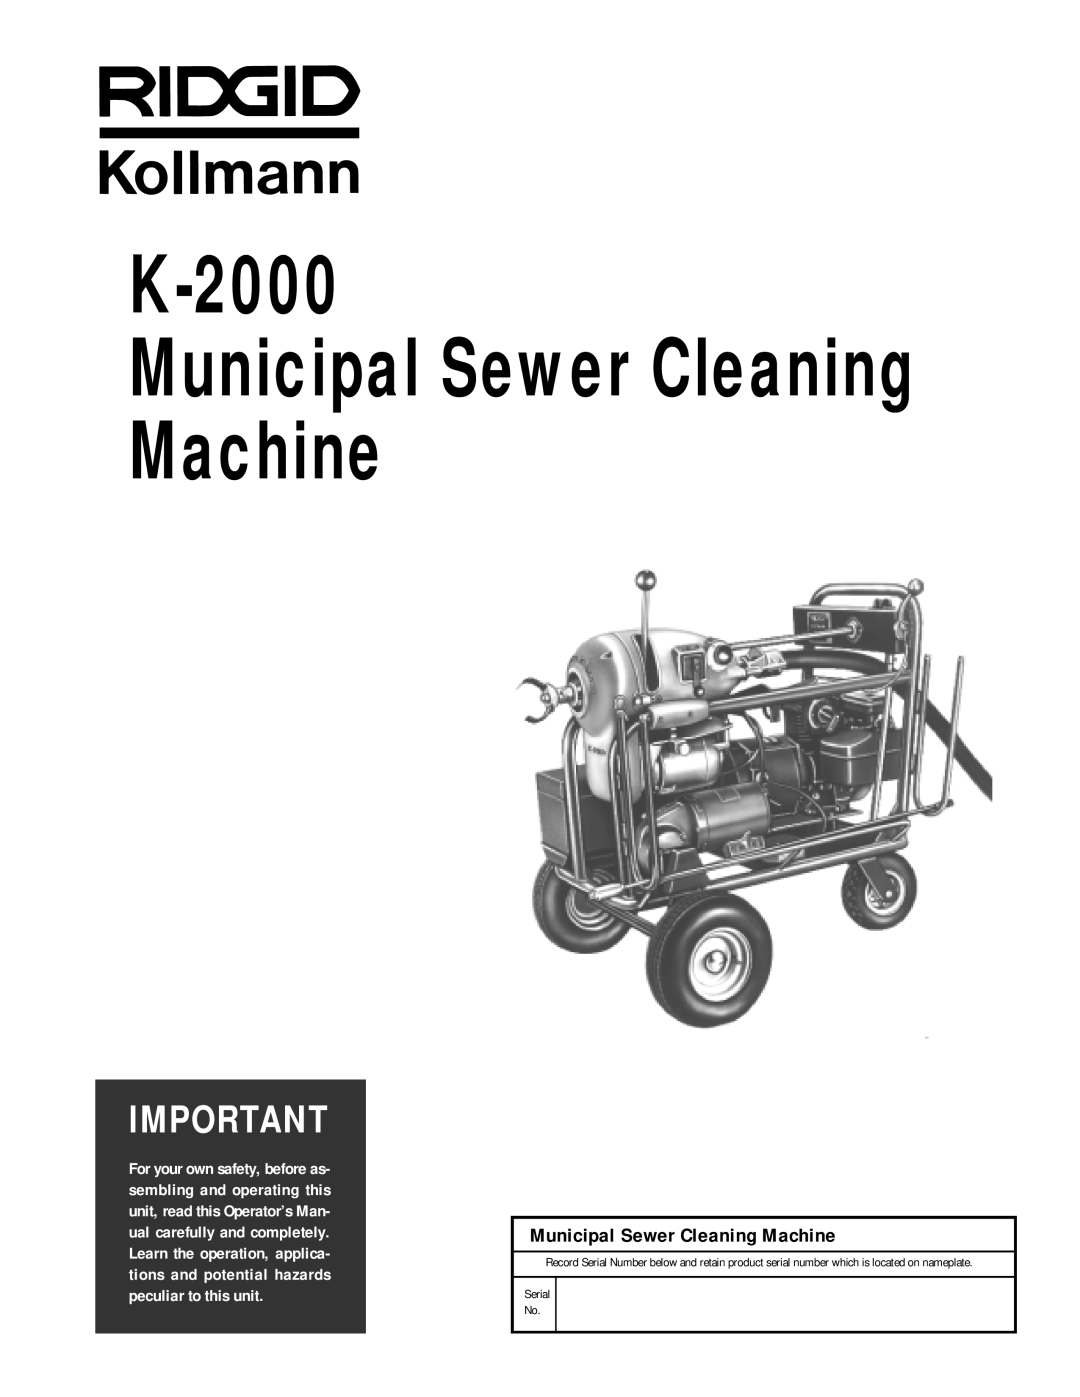 RIDGID K-2000 manual Municipal Sewer Cleaning Machine, Serial No 